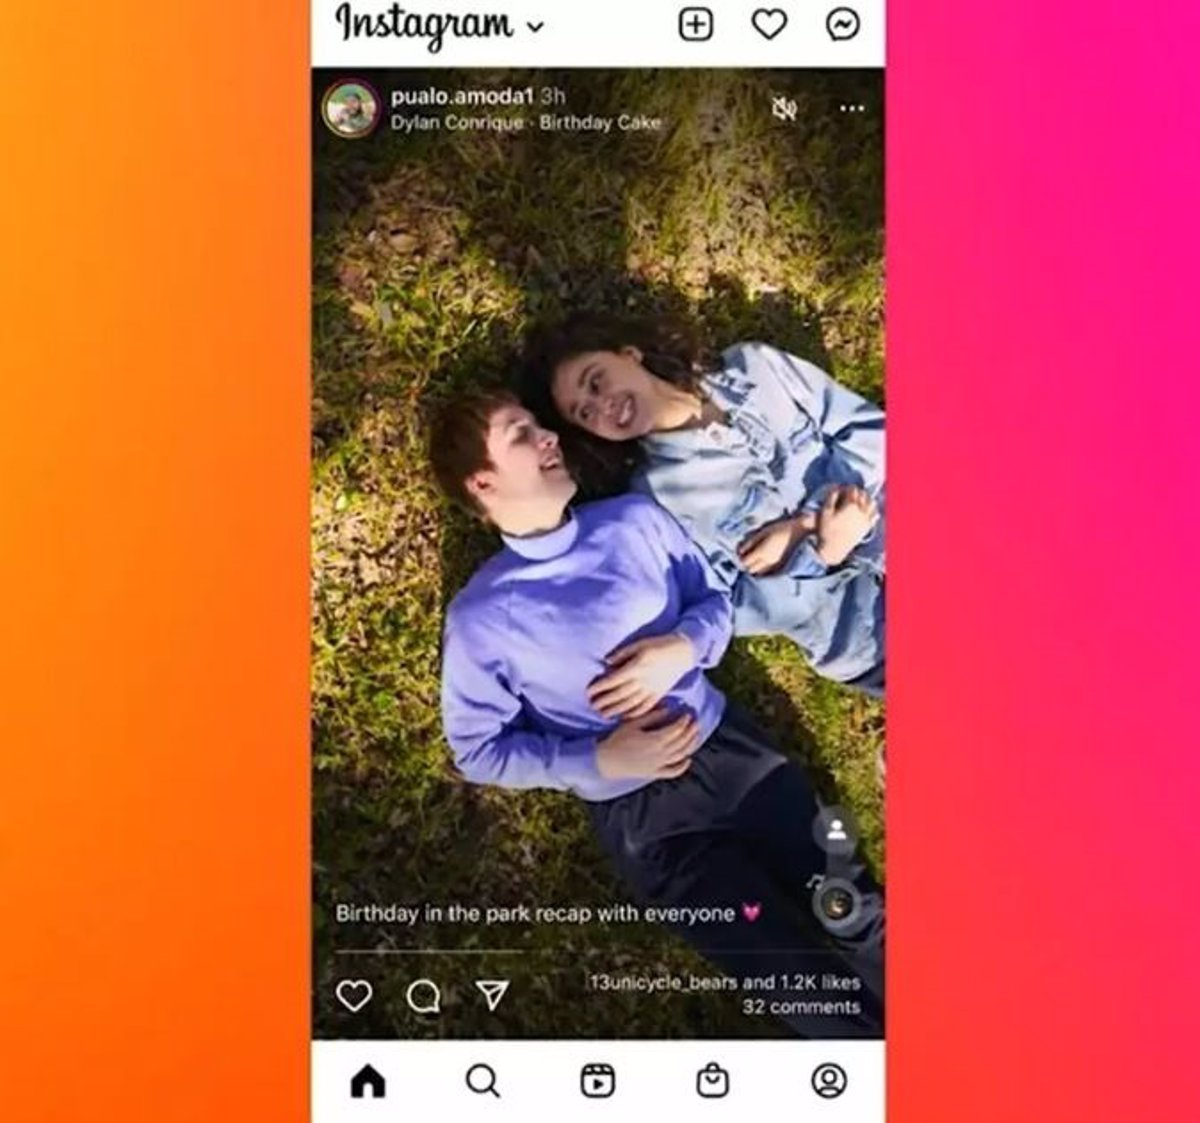 Instagram begins testing its new full-screen ‘feed’